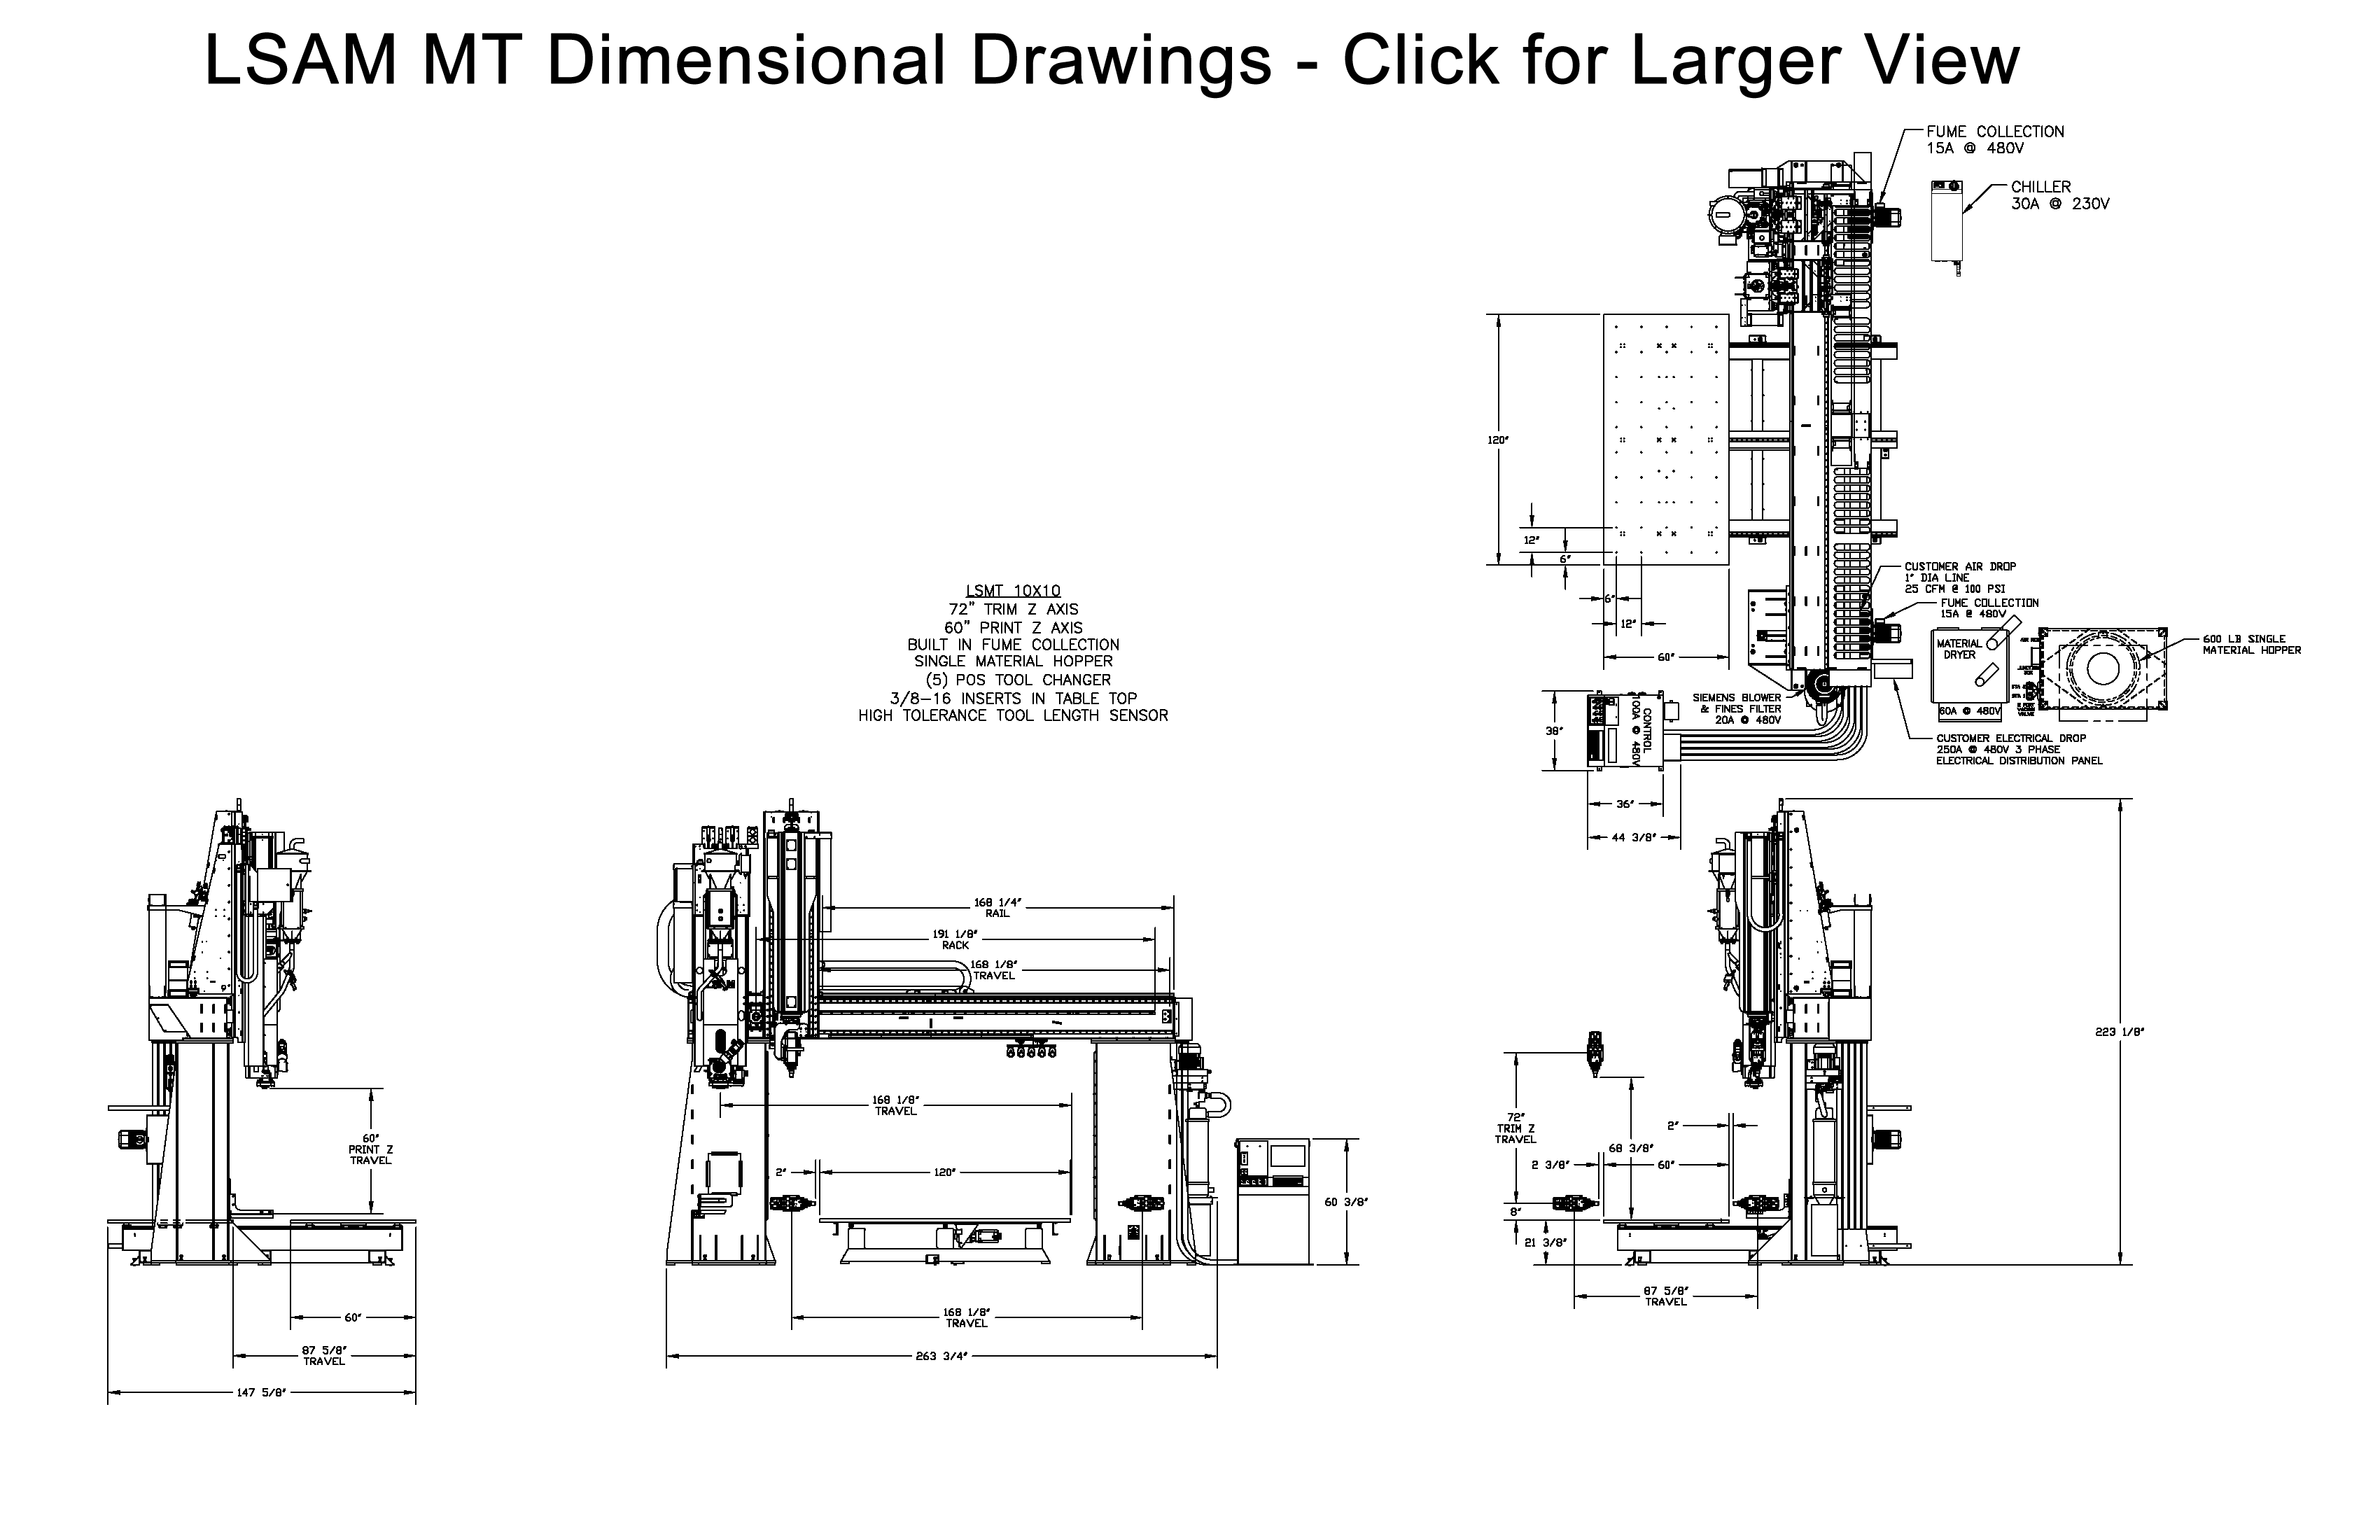 LSAM MT Dimensional Drawings Shown